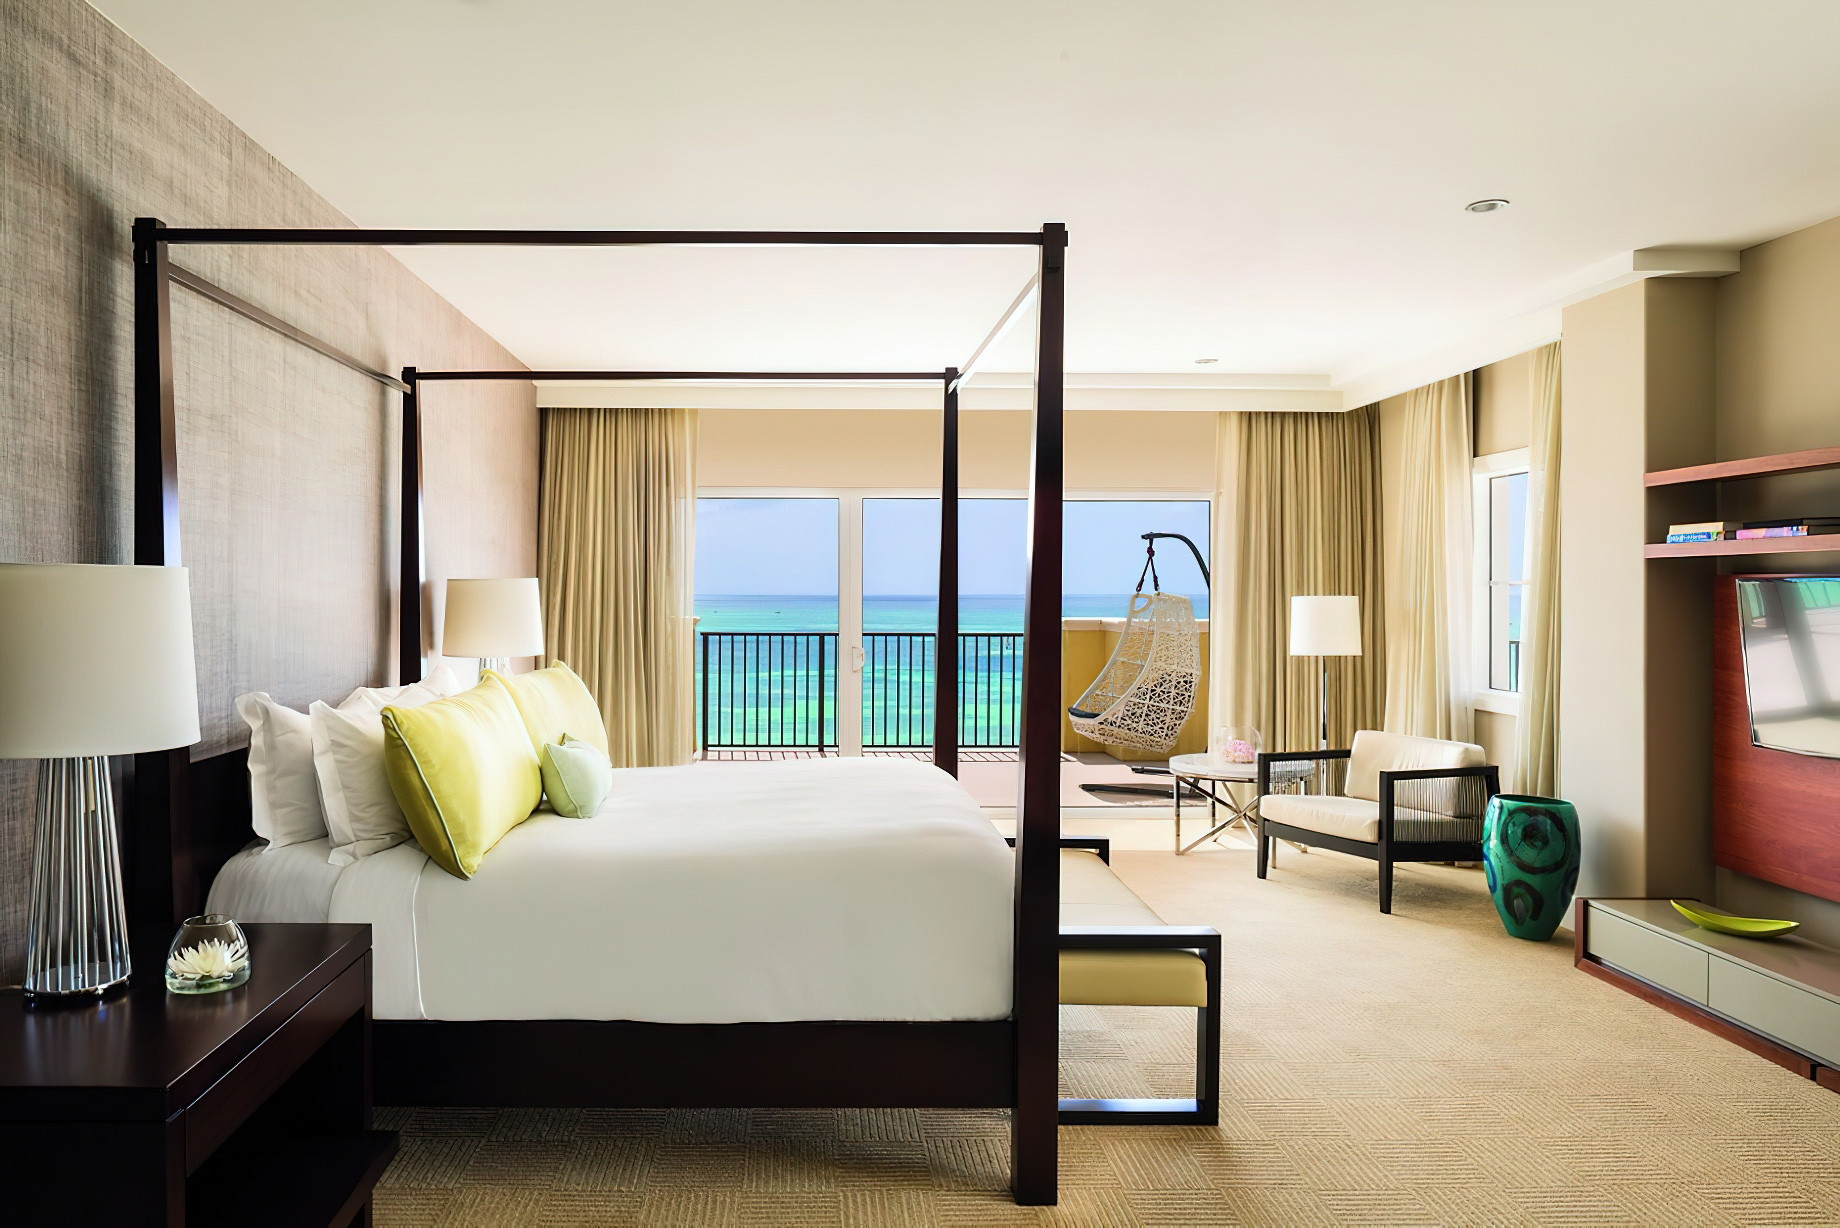 The Ritz-Carlton, Aruba Resort - Palm Beach, Aruba - Ritz-Carlton Suite Bedroom